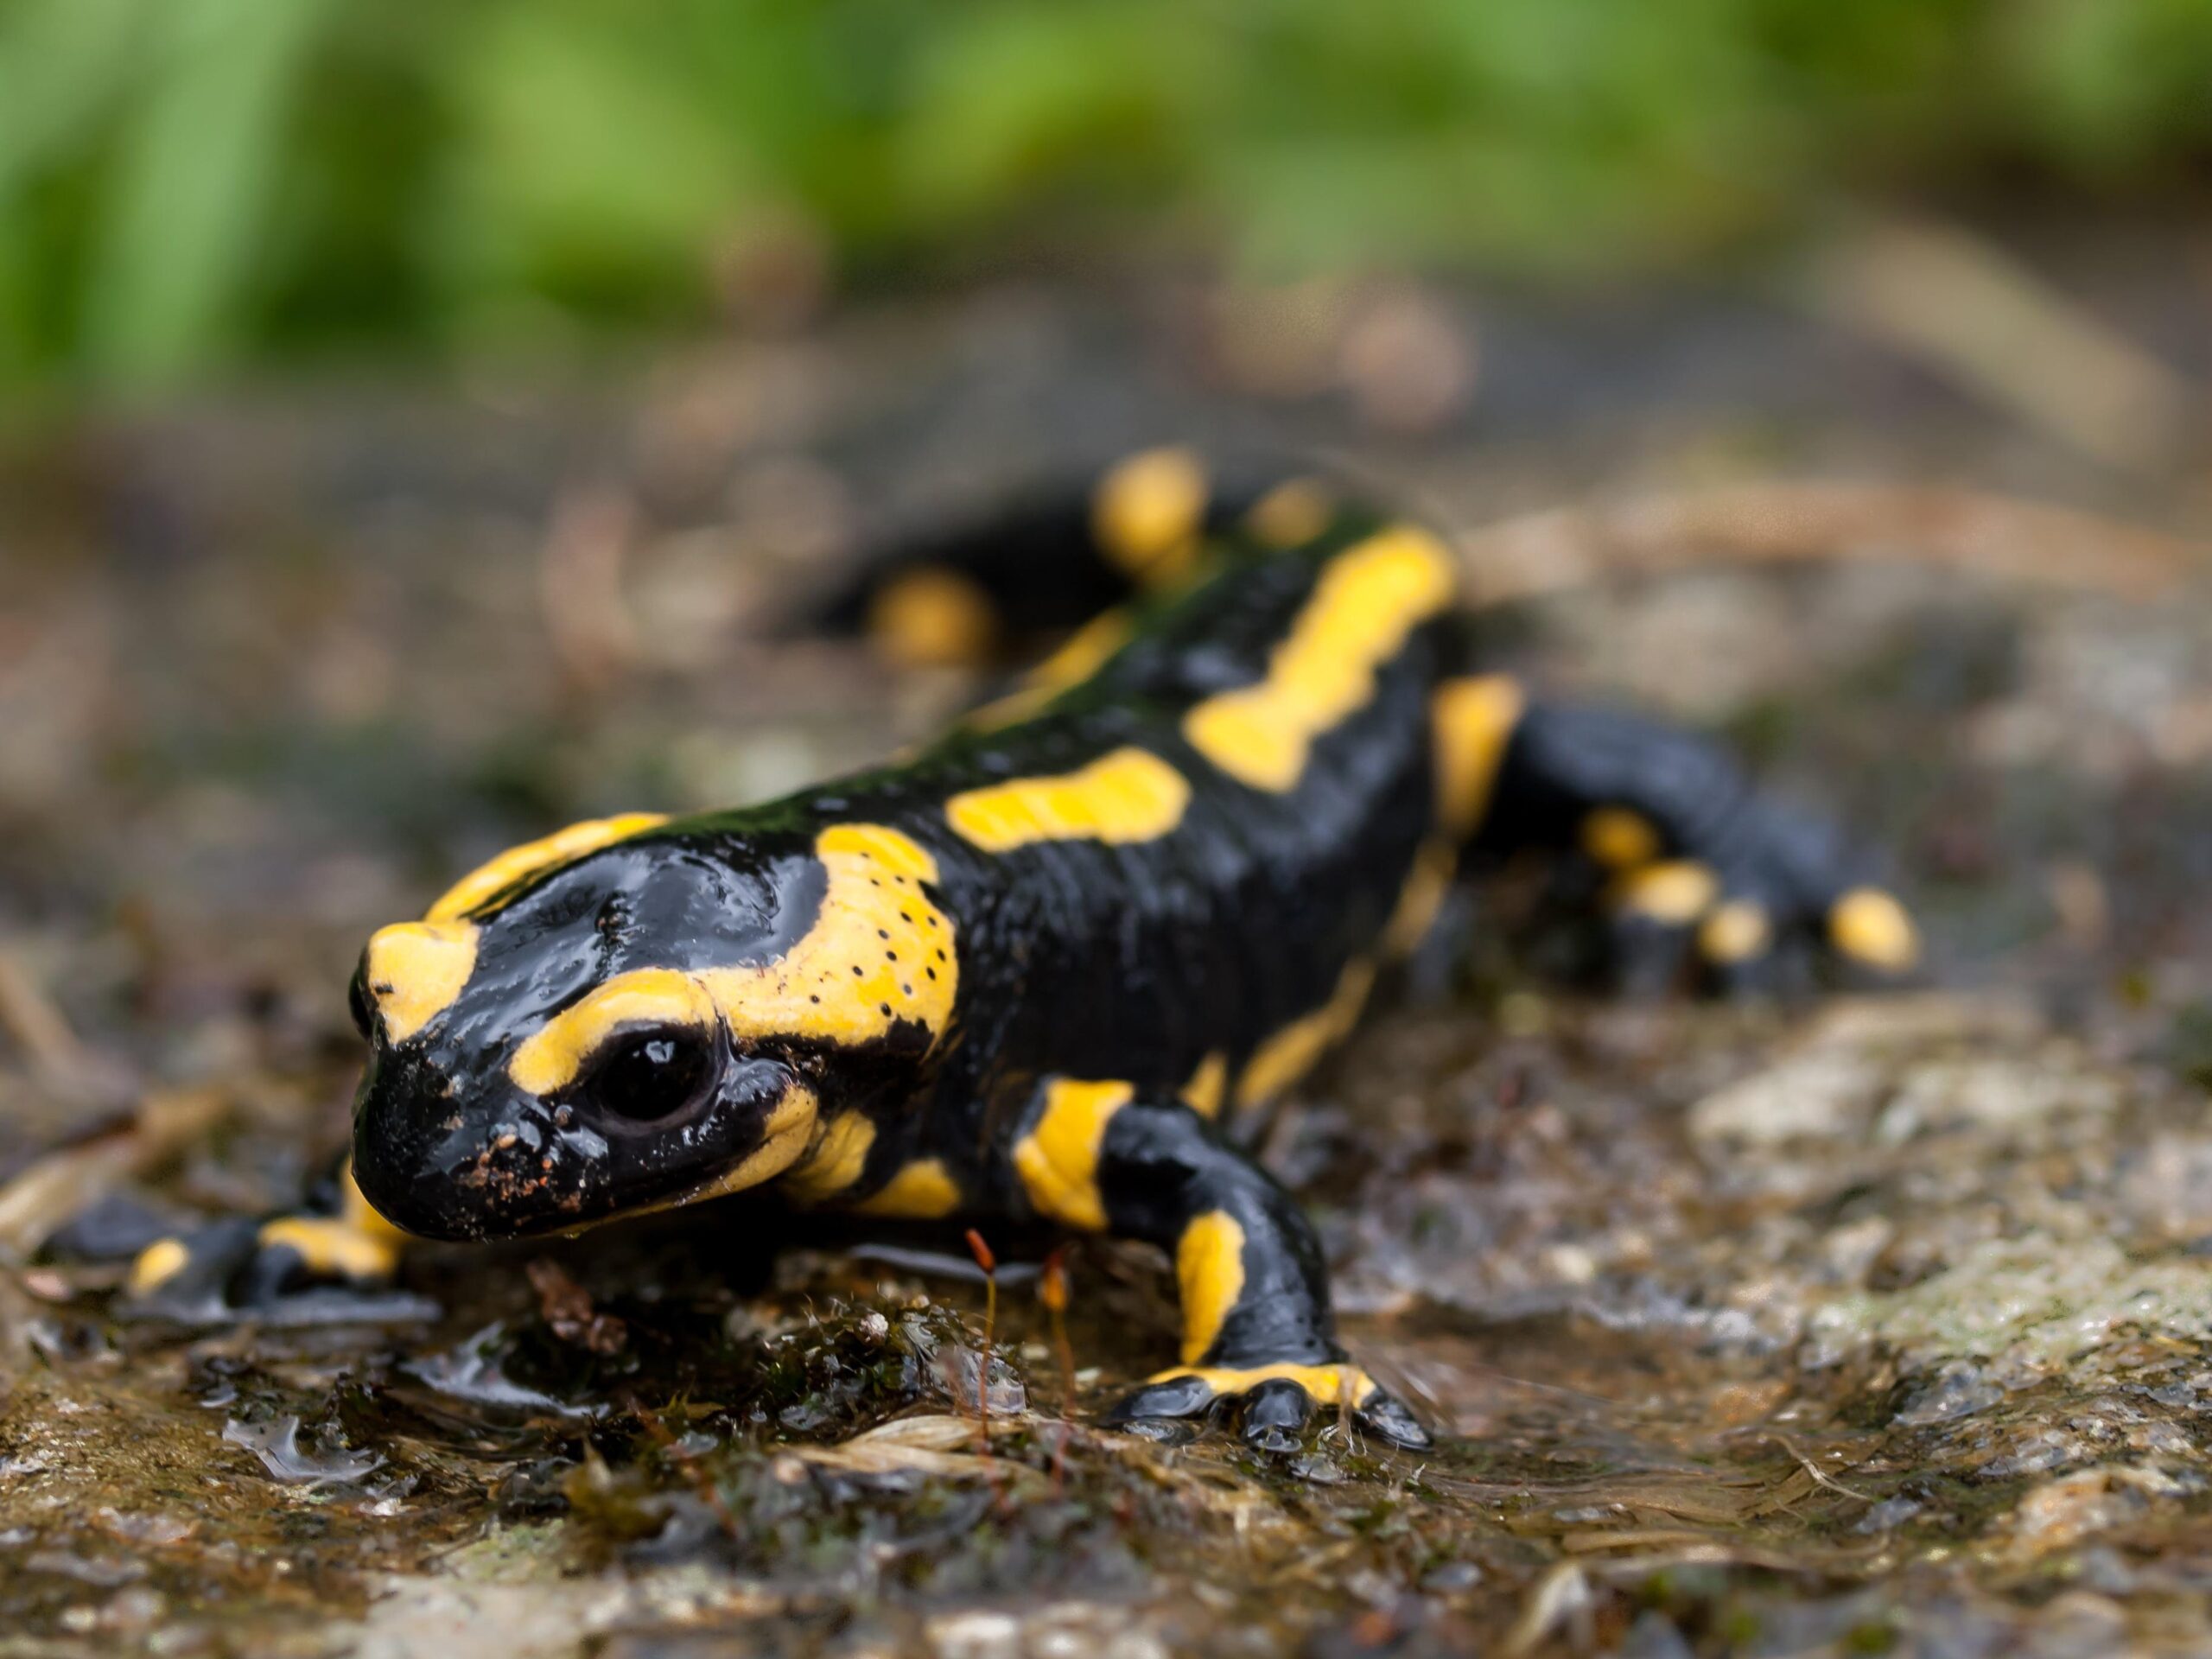 Black and yellow lizard, fire salamander HD wallpapers